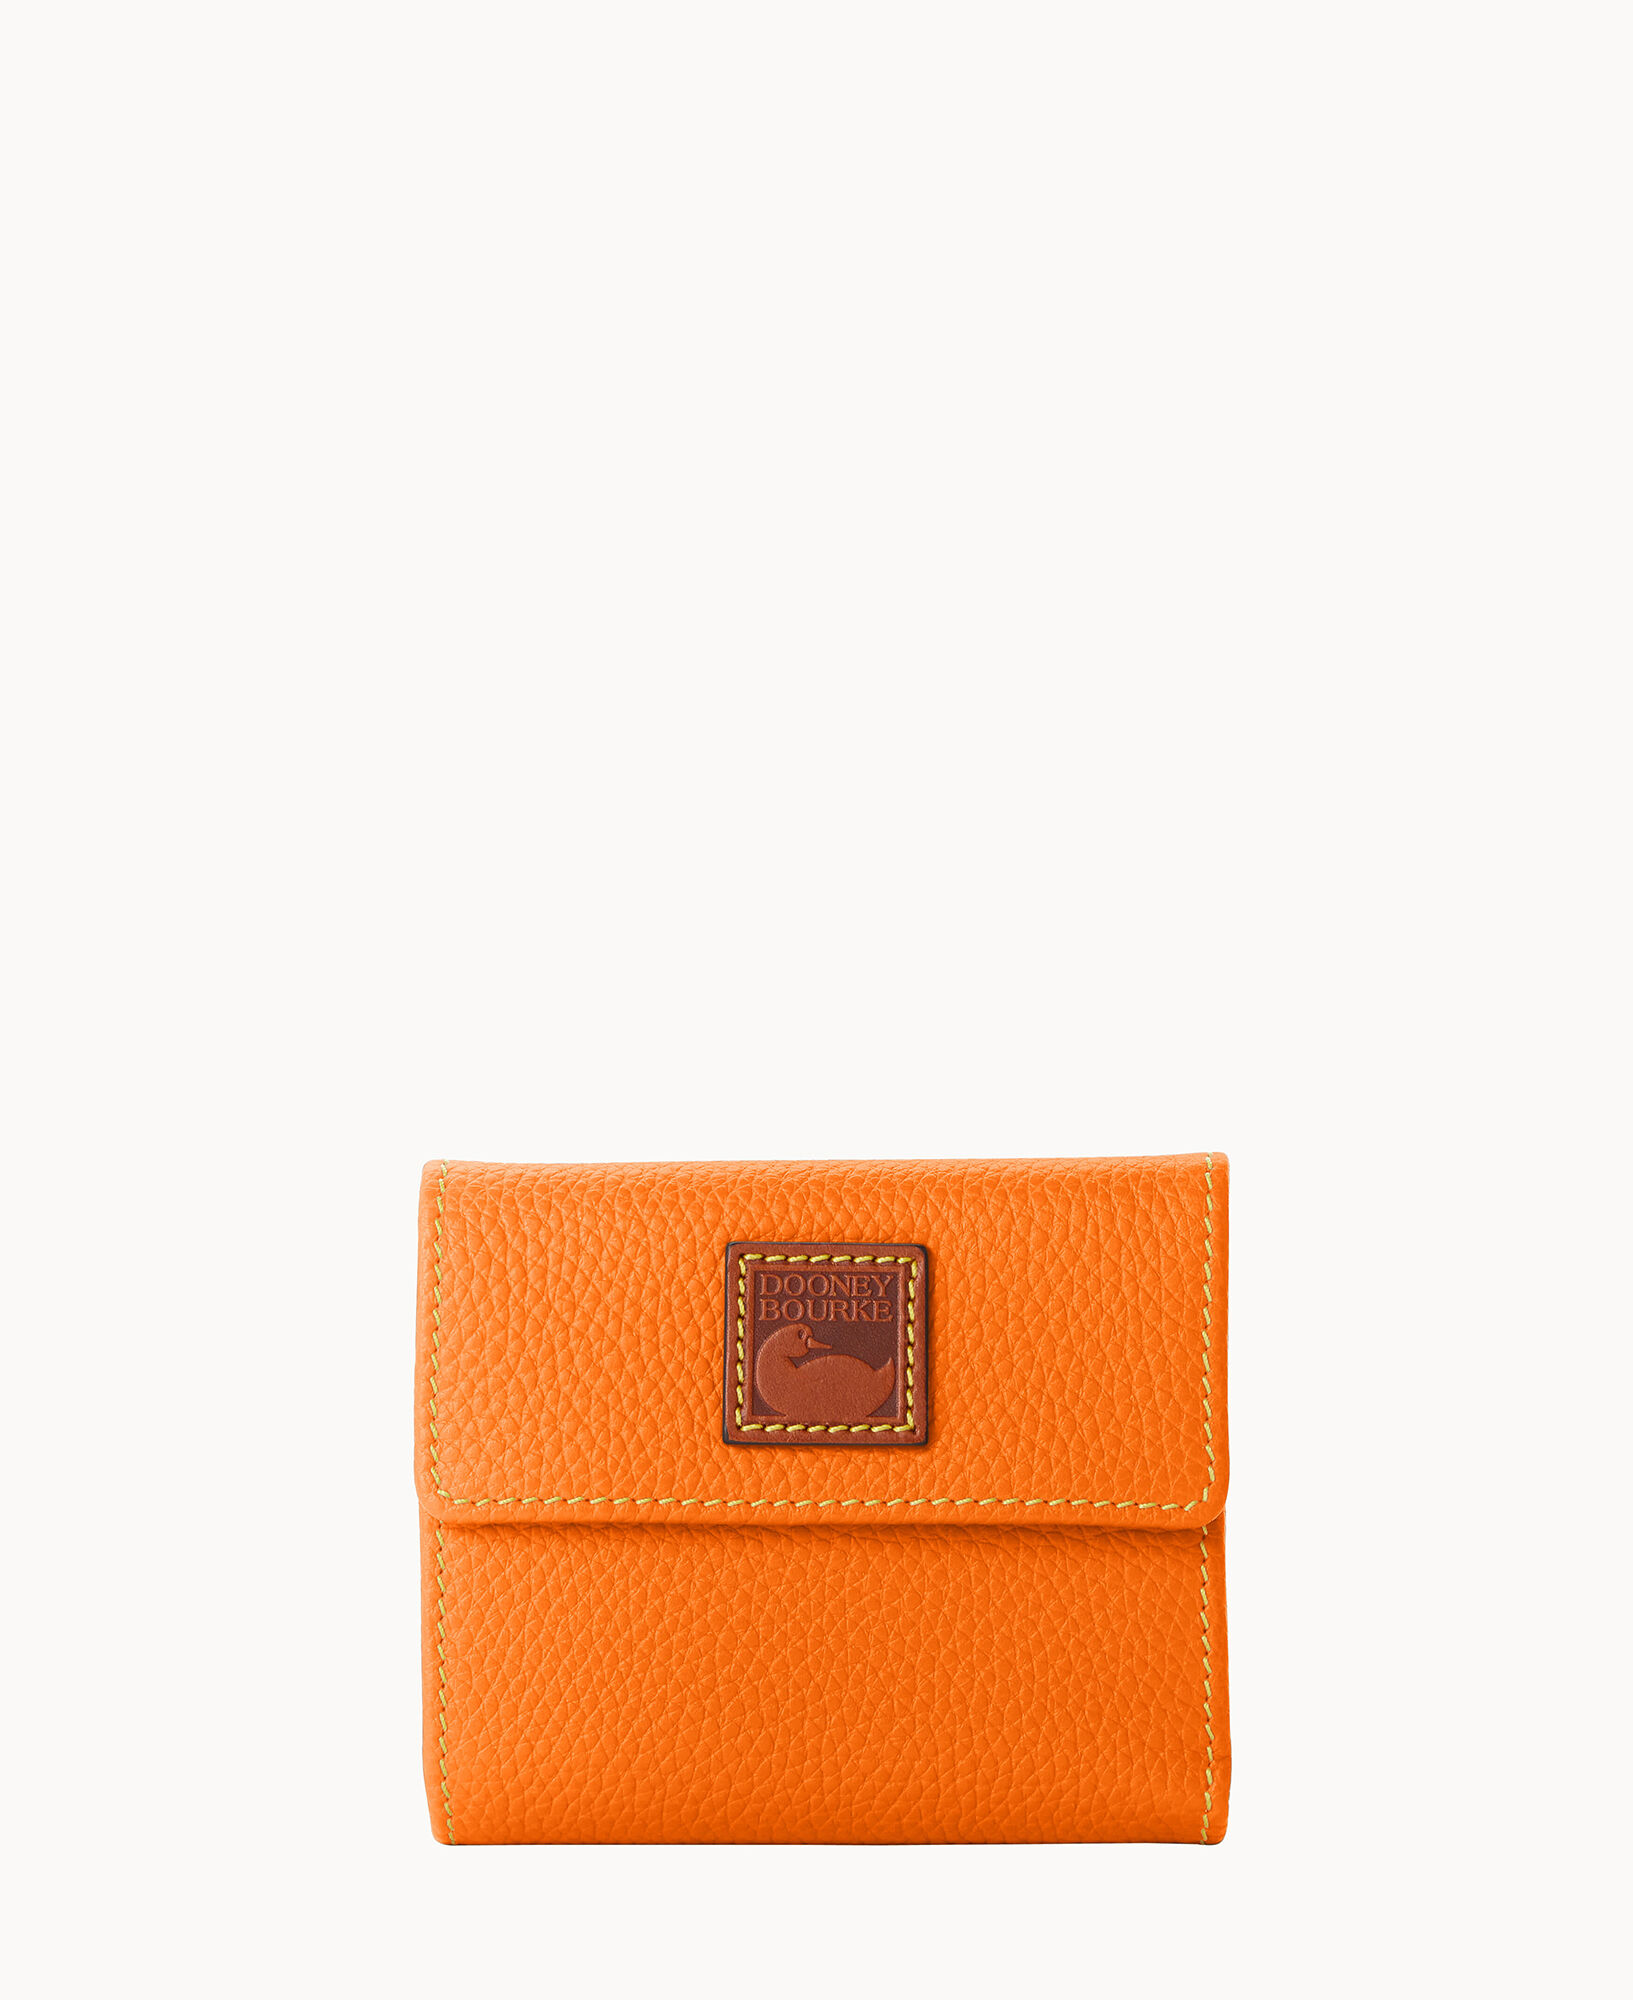 Dooney & Bourke Pebble Leather Small Flap Wallet ,Black